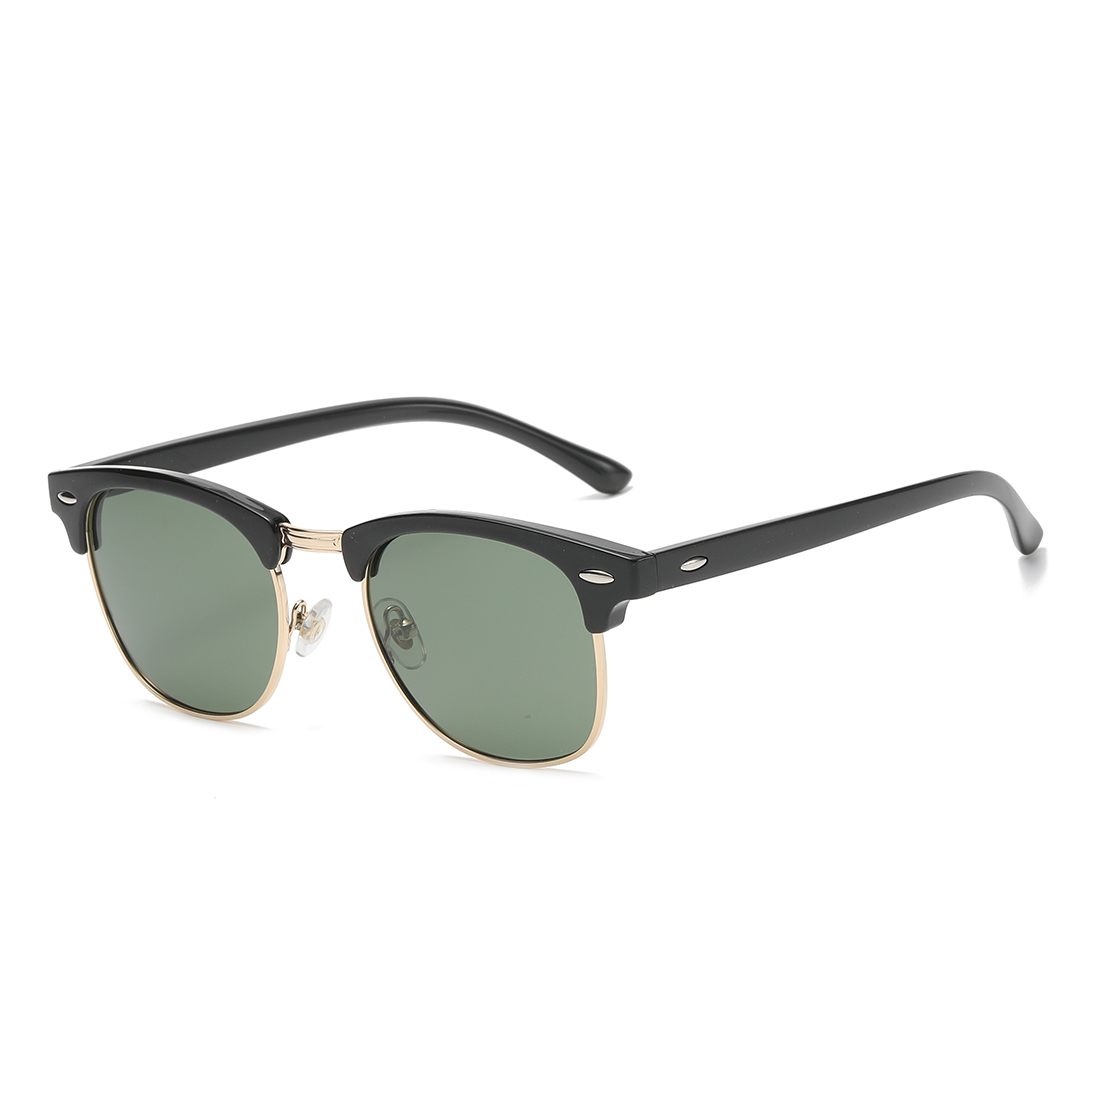 Clubmaster sunglasses Blue Pink Color Polarized Lens Sunglasses Custom Sun Glasses